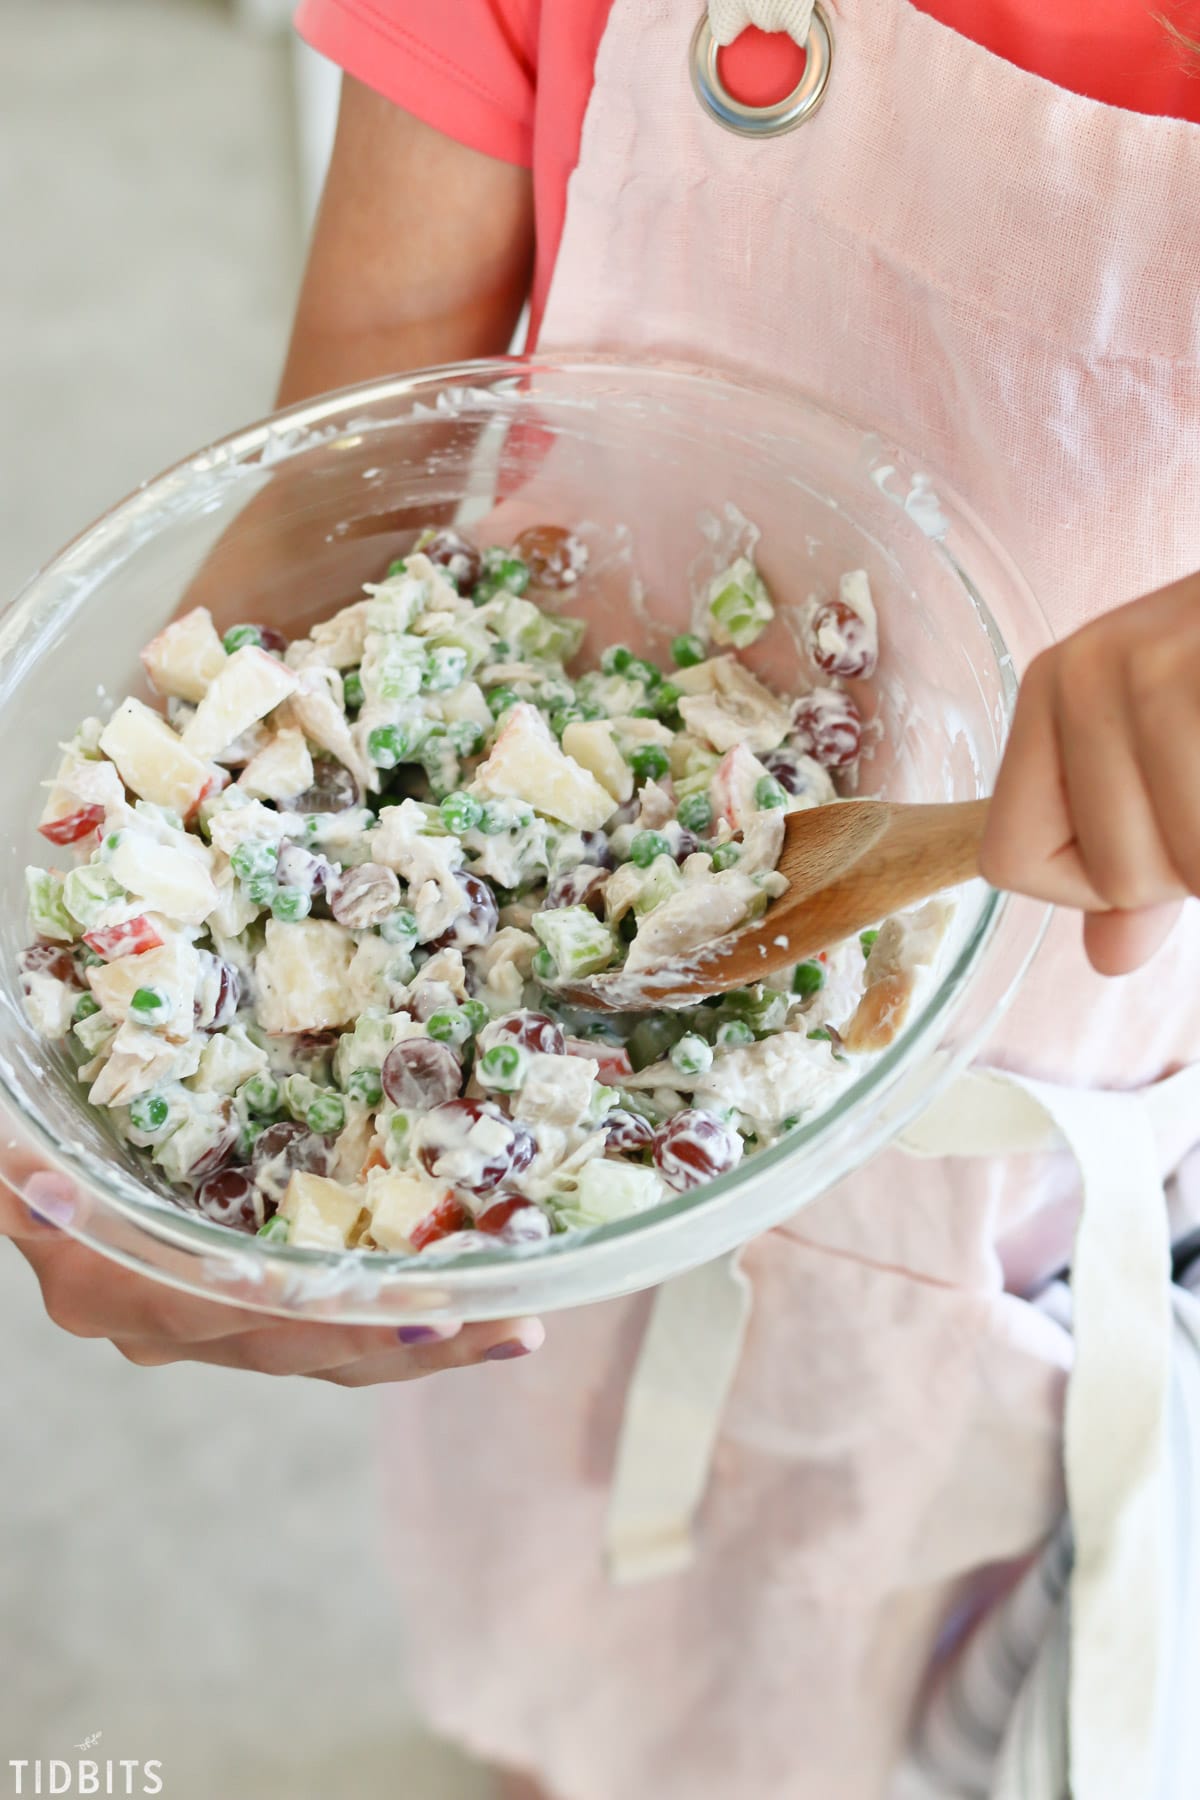 Light and Healthy Chicken Salad Recipe with Yogurt Dressing